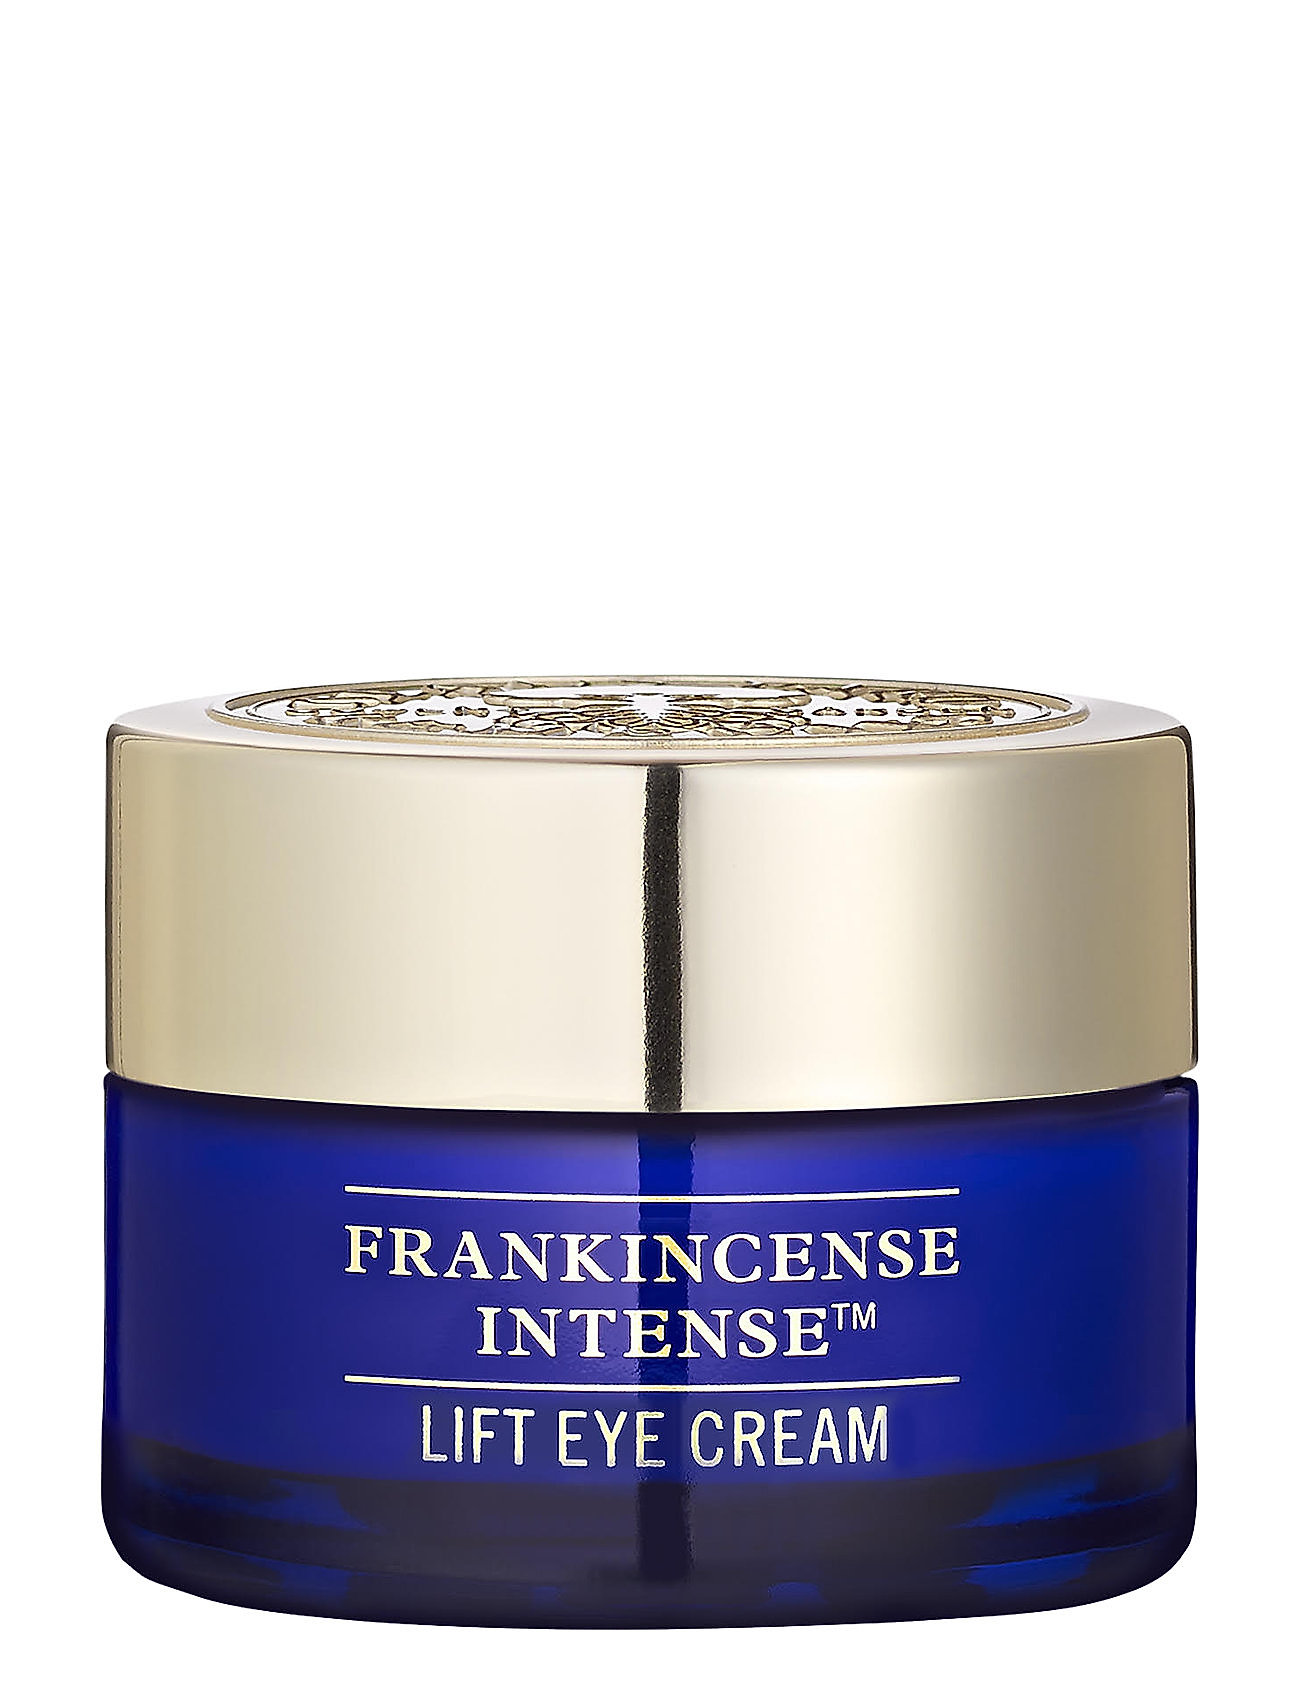 Frankincense Intense Lift Eye Cream Beauty WOMEN Skin Care Face Eye Cream Nude Neal's Yard Remedies